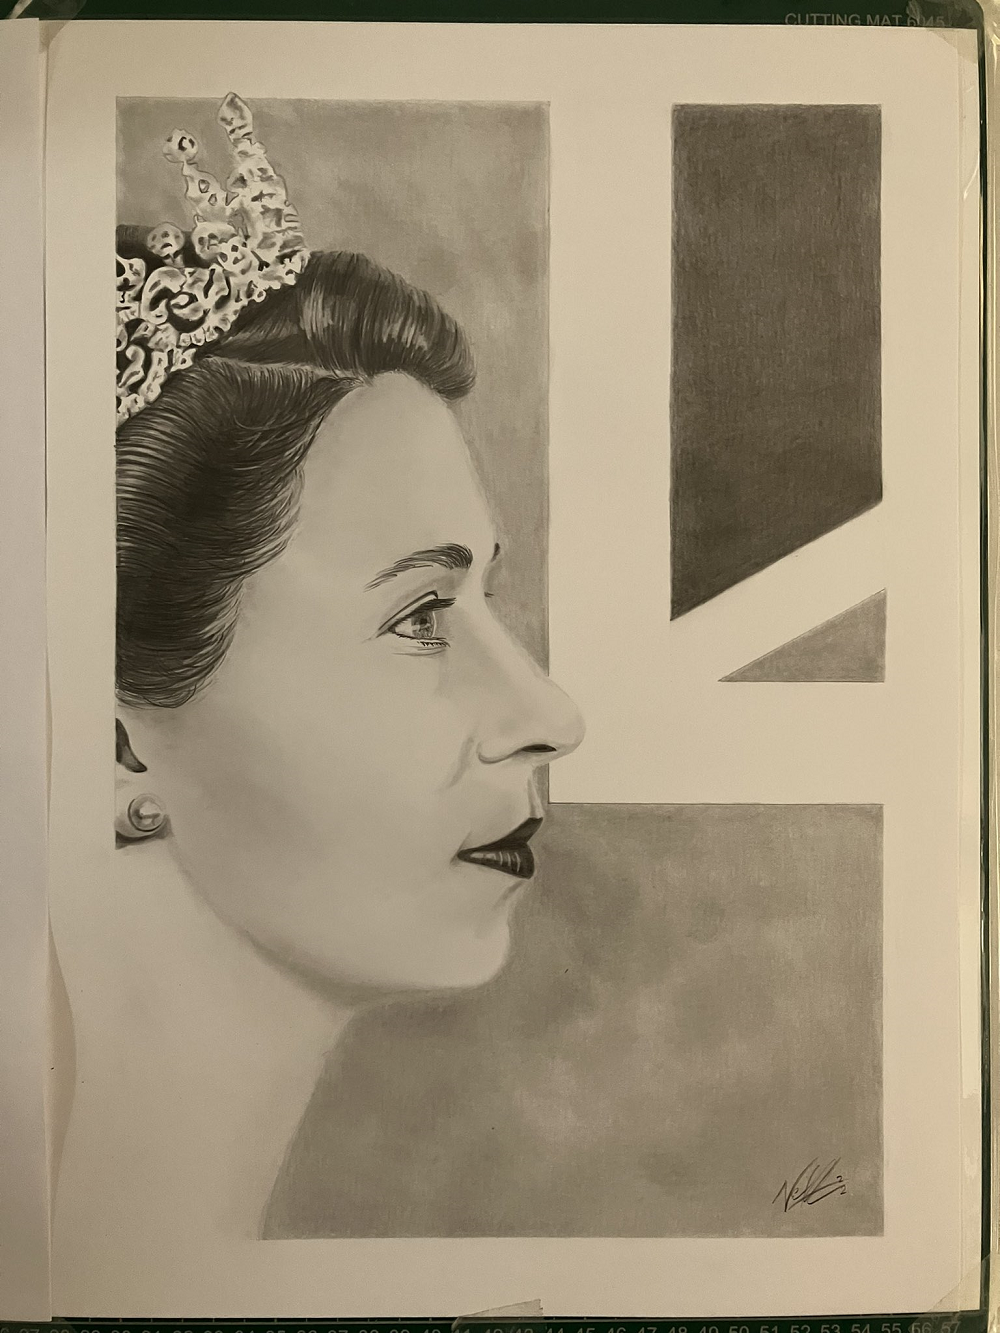 Pencil drawing of Queen Elizabeth II created by Neil Gardner